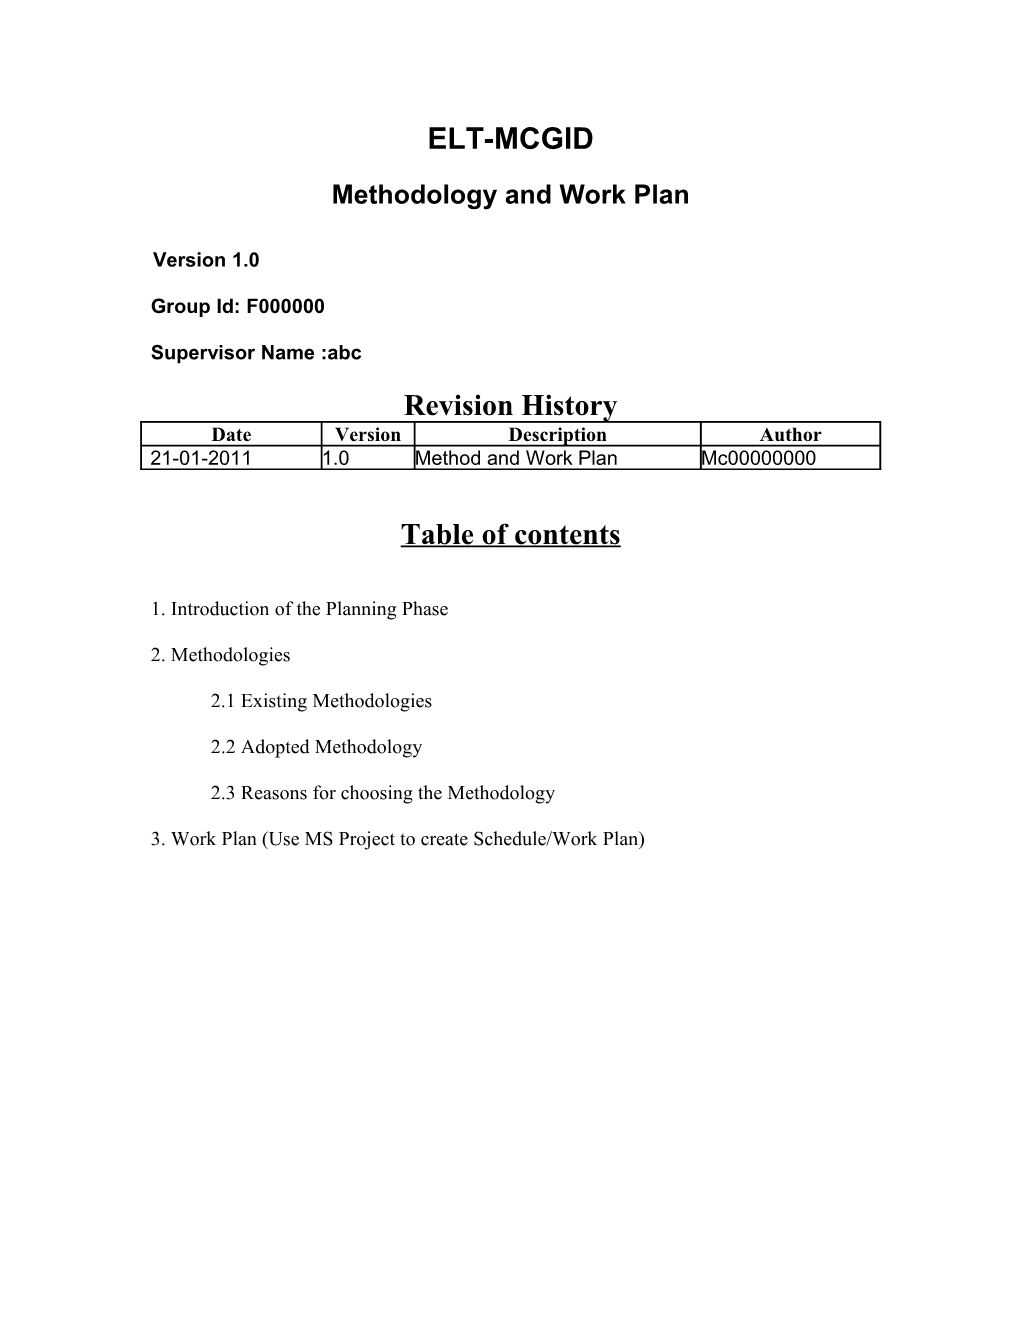 Methodology and Work Plan